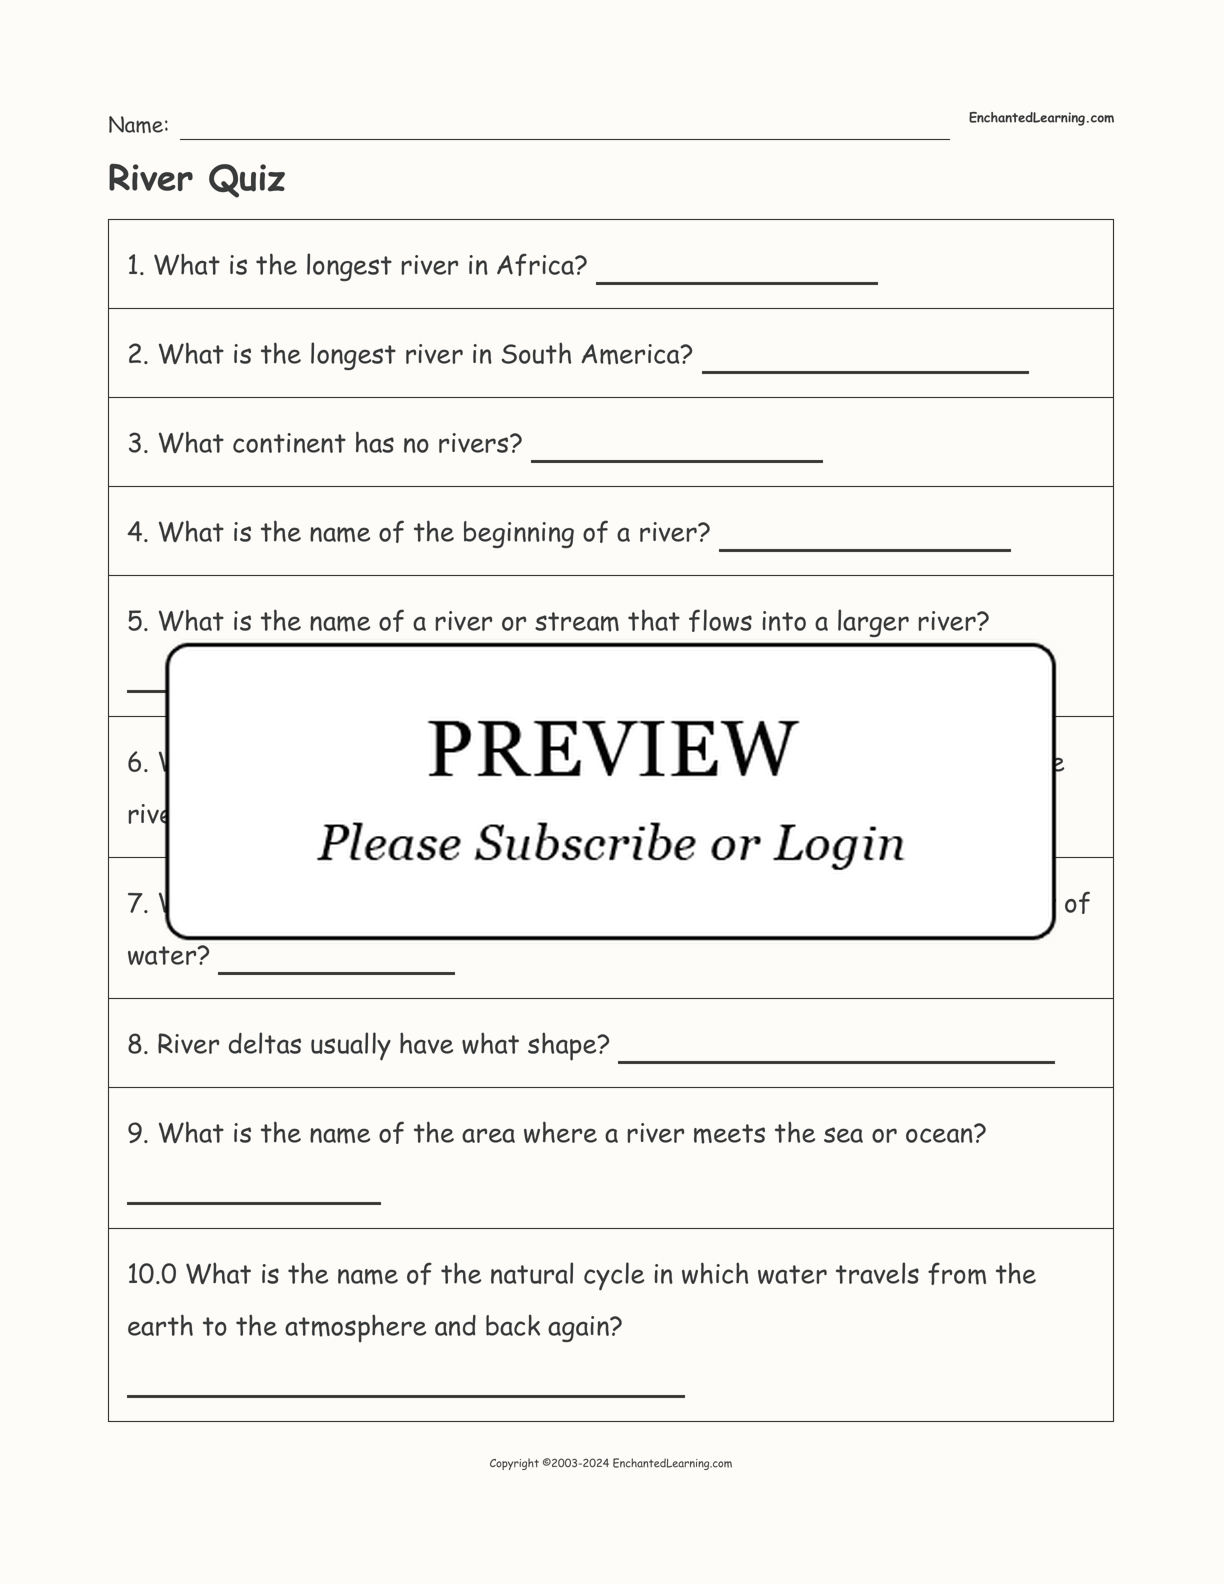 River Quiz interactive worksheet page 1